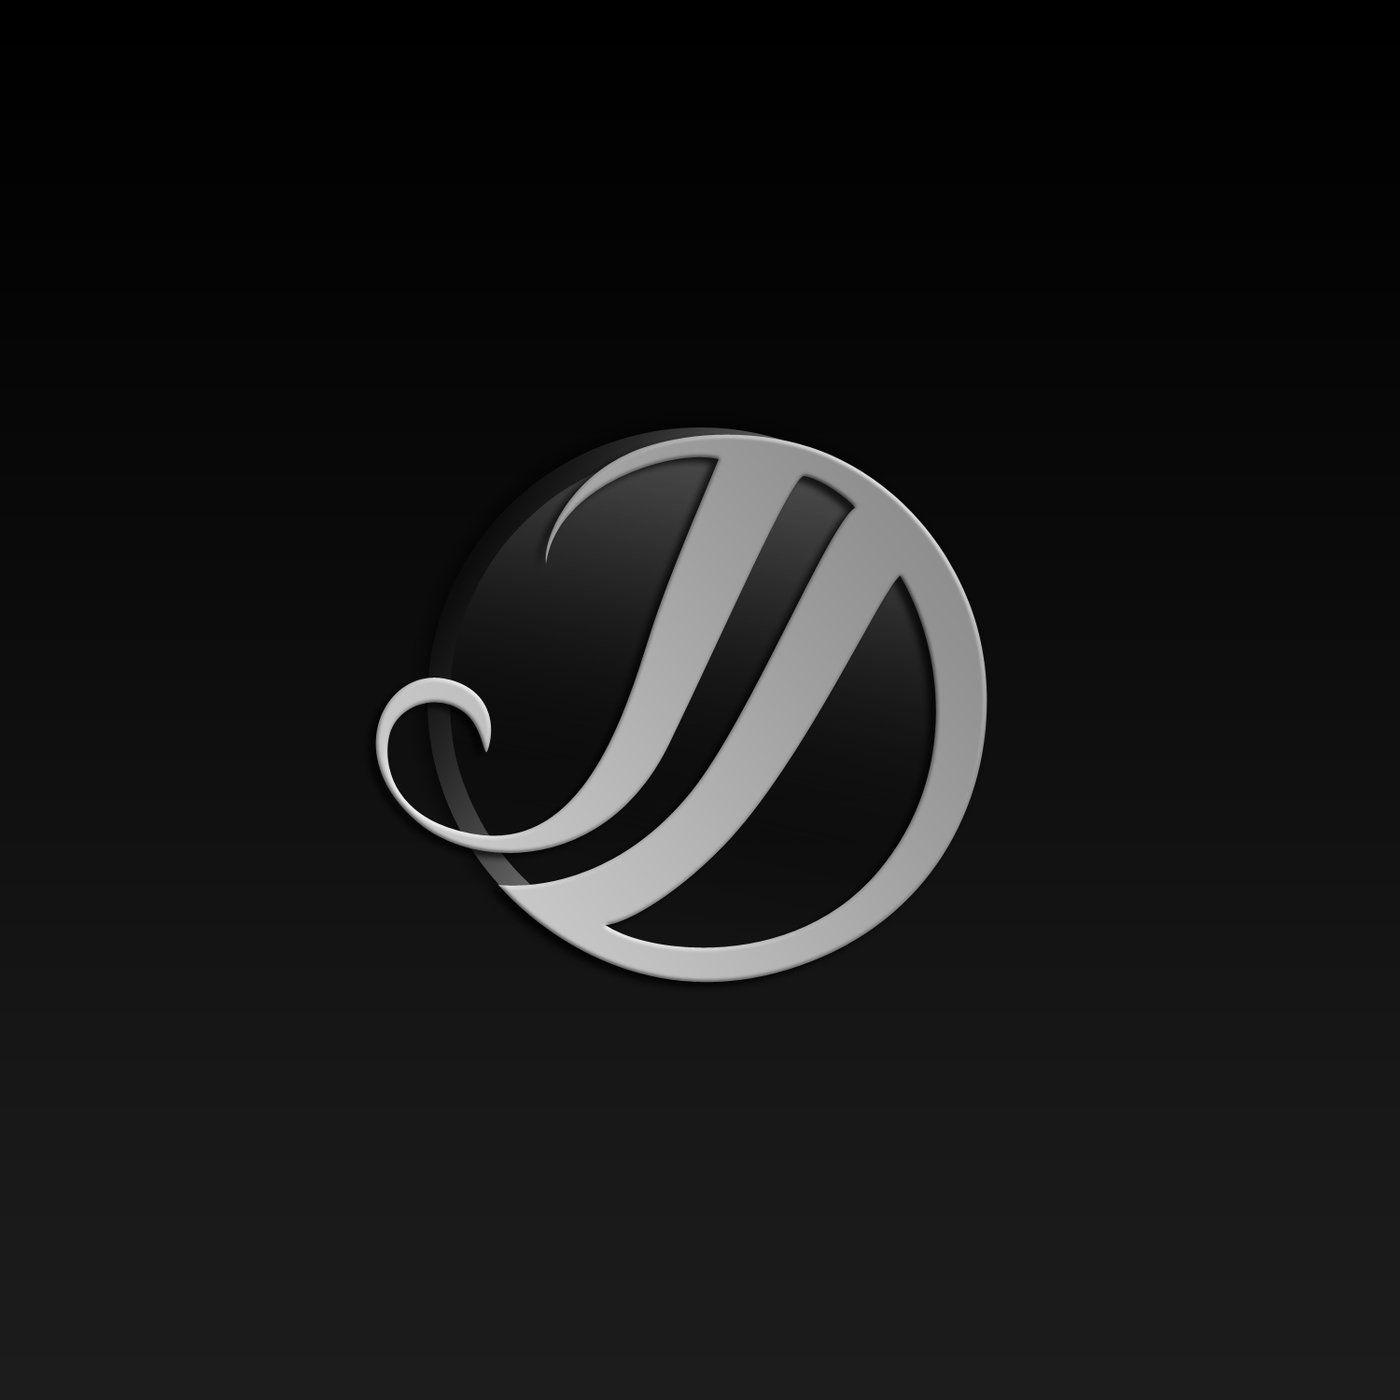 JD Logo - Logo Design - JD Photography by Mariya Brachkova at Coroflot.com